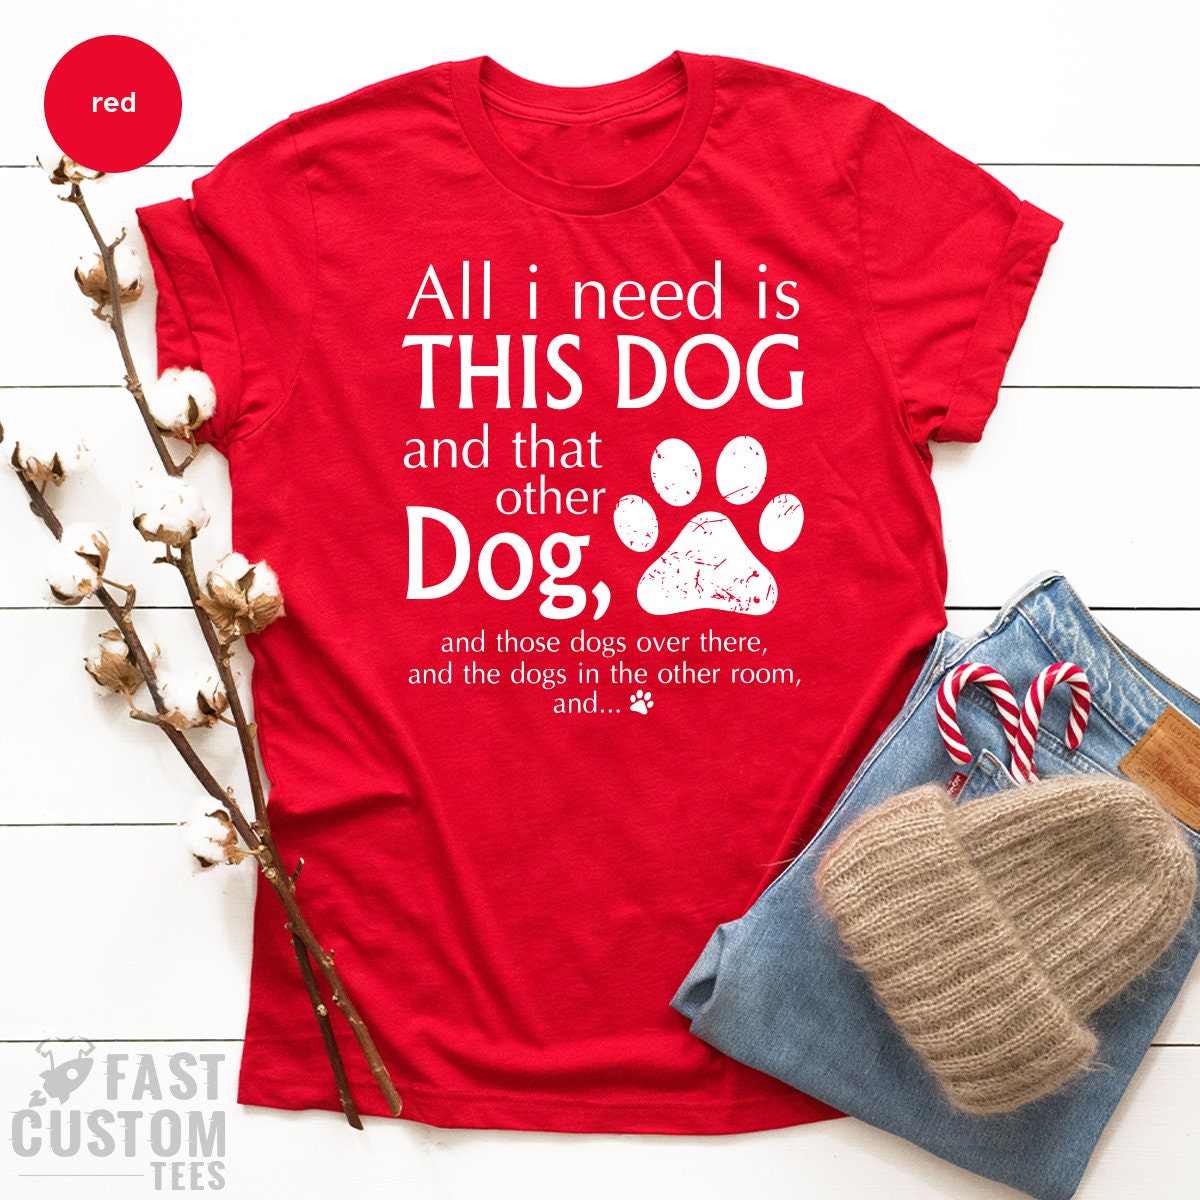 Dog Mom Shirts, Dog Mama TShirt, Dog Lovers Gift, Fur Mama Shirt, Dog Mom Gift, Need Is This Dog Tee, Pet Lover T Shirt, Dog Lover Tee - Fastdeliverytees.com